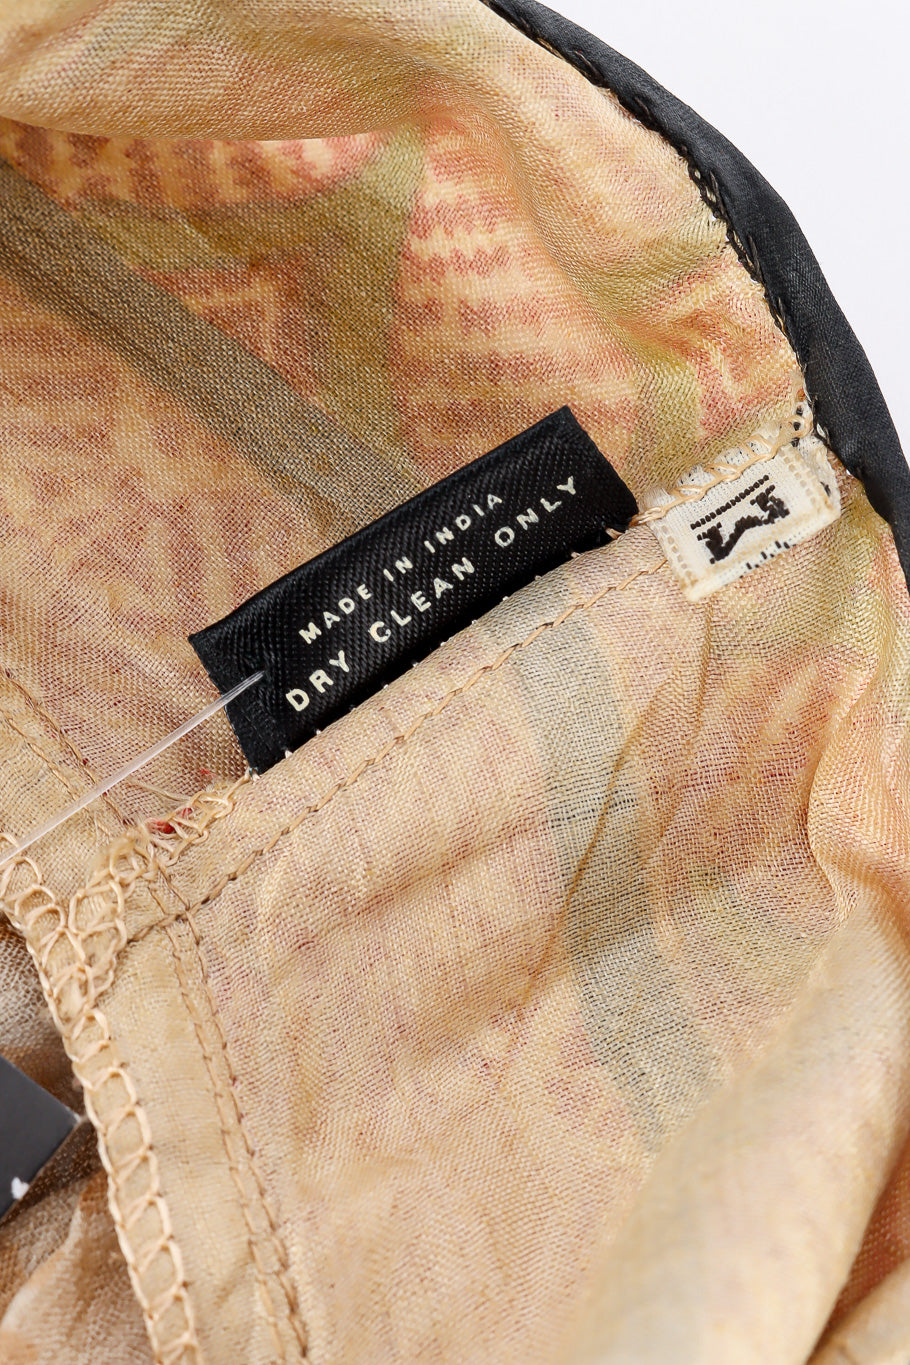 Block print silk dress by Ritu Kumar for Judith Ann Made-in Label close-up. @recessla